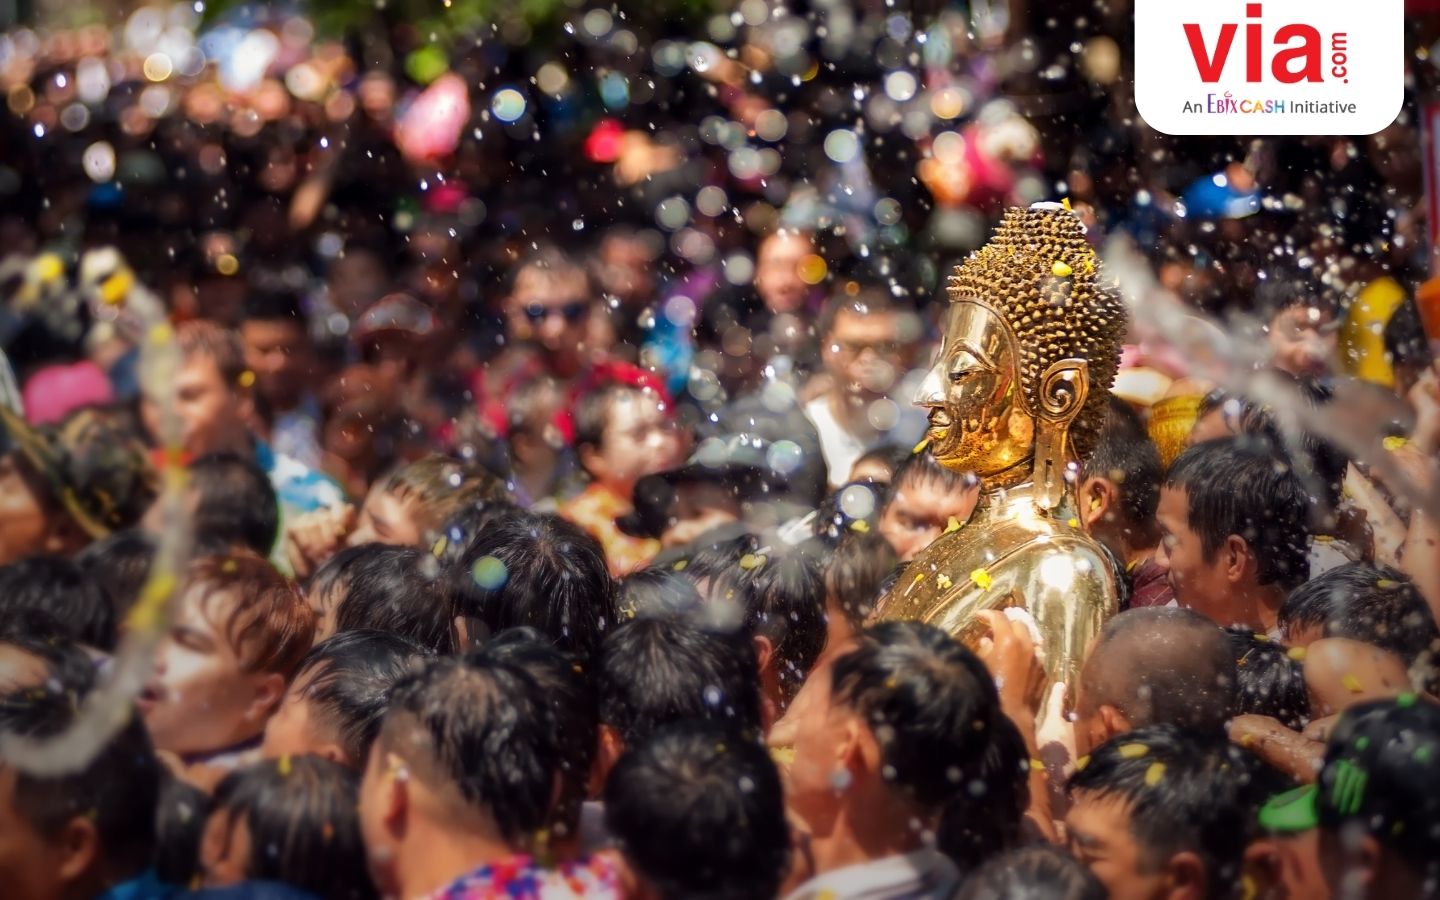 Sambut Kemeriahan Festival Songkran di Thailand: Lebih dari Sekadar Festival Air